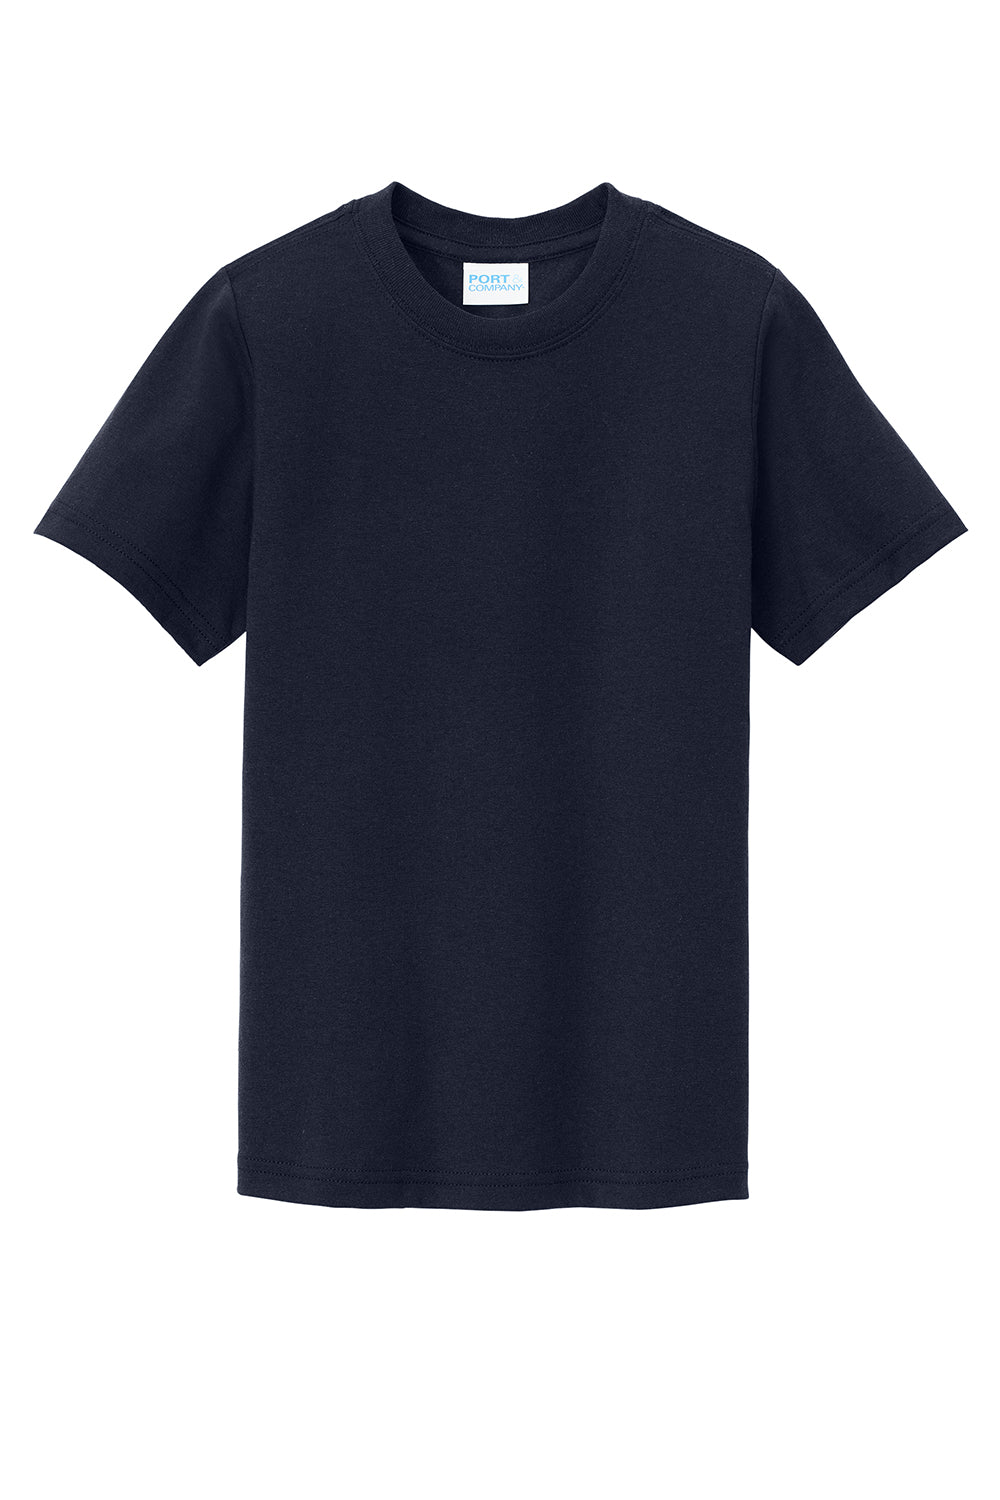 Port & Company PC330Y Youth Short Sleeve Crewneck T-Shirt Deep Navy Blue Flat Front